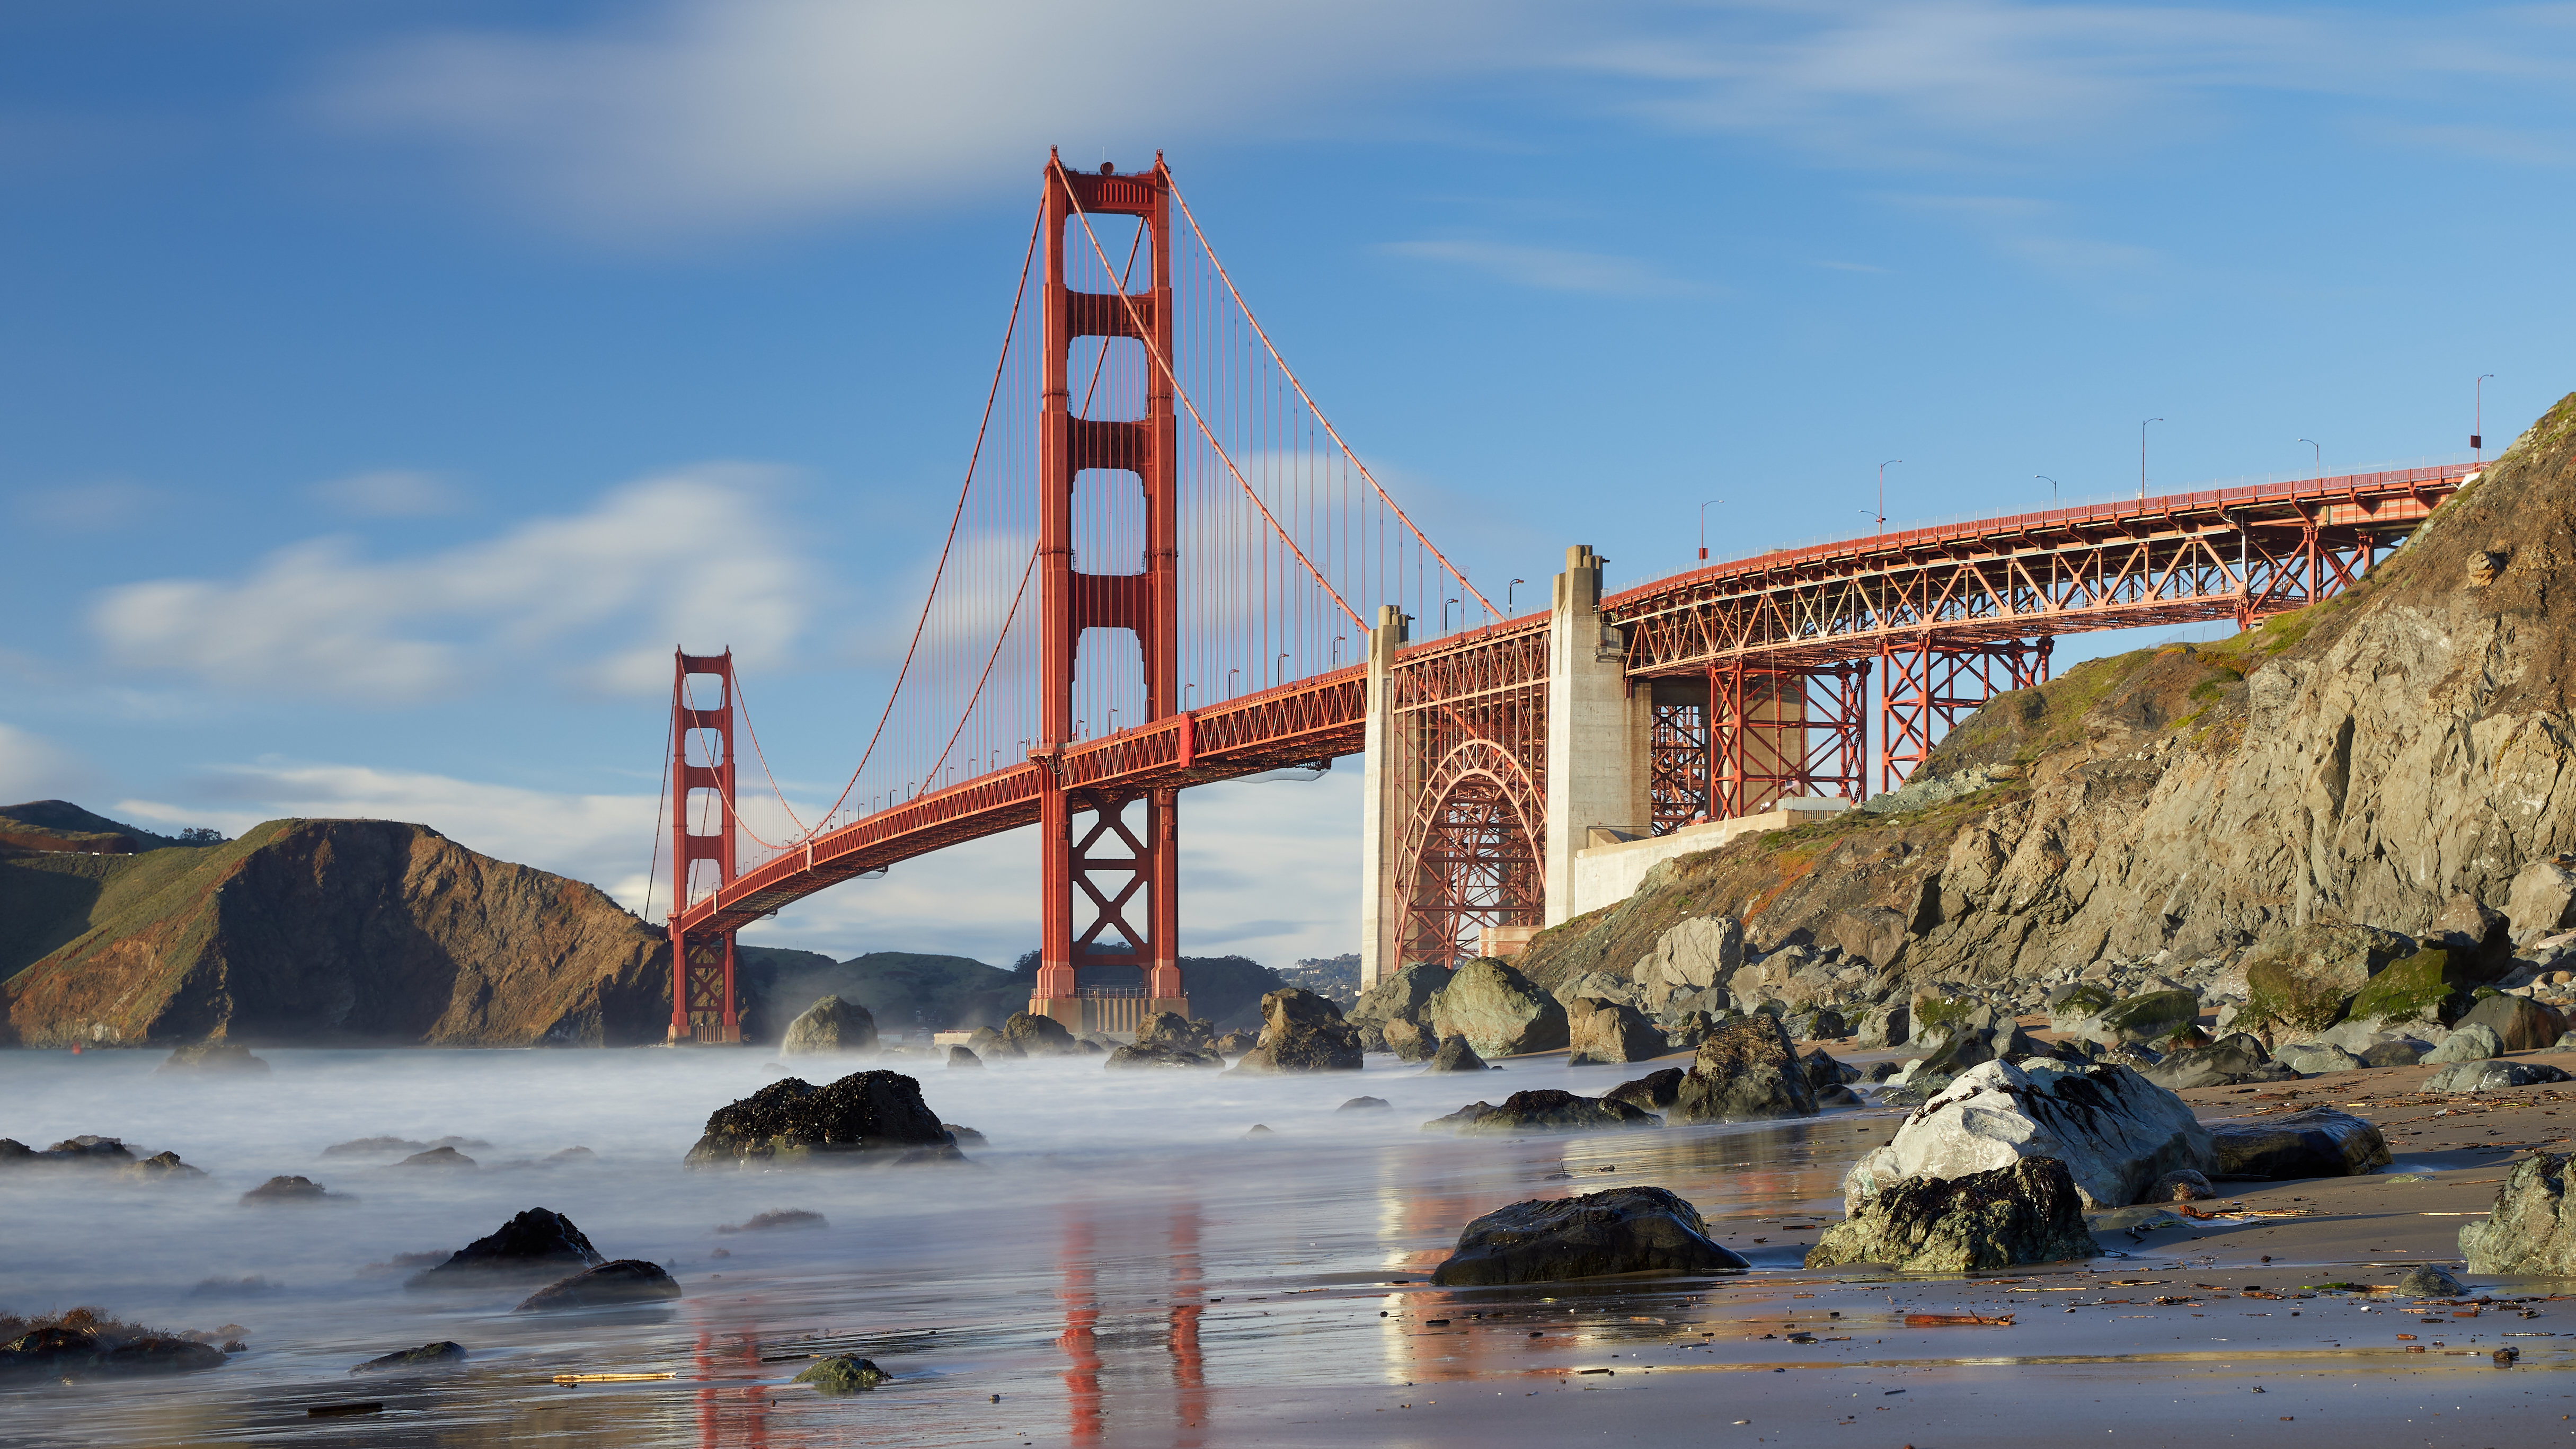 Golden Gate Bridge as seen from Marshall’s Beach, March 2018